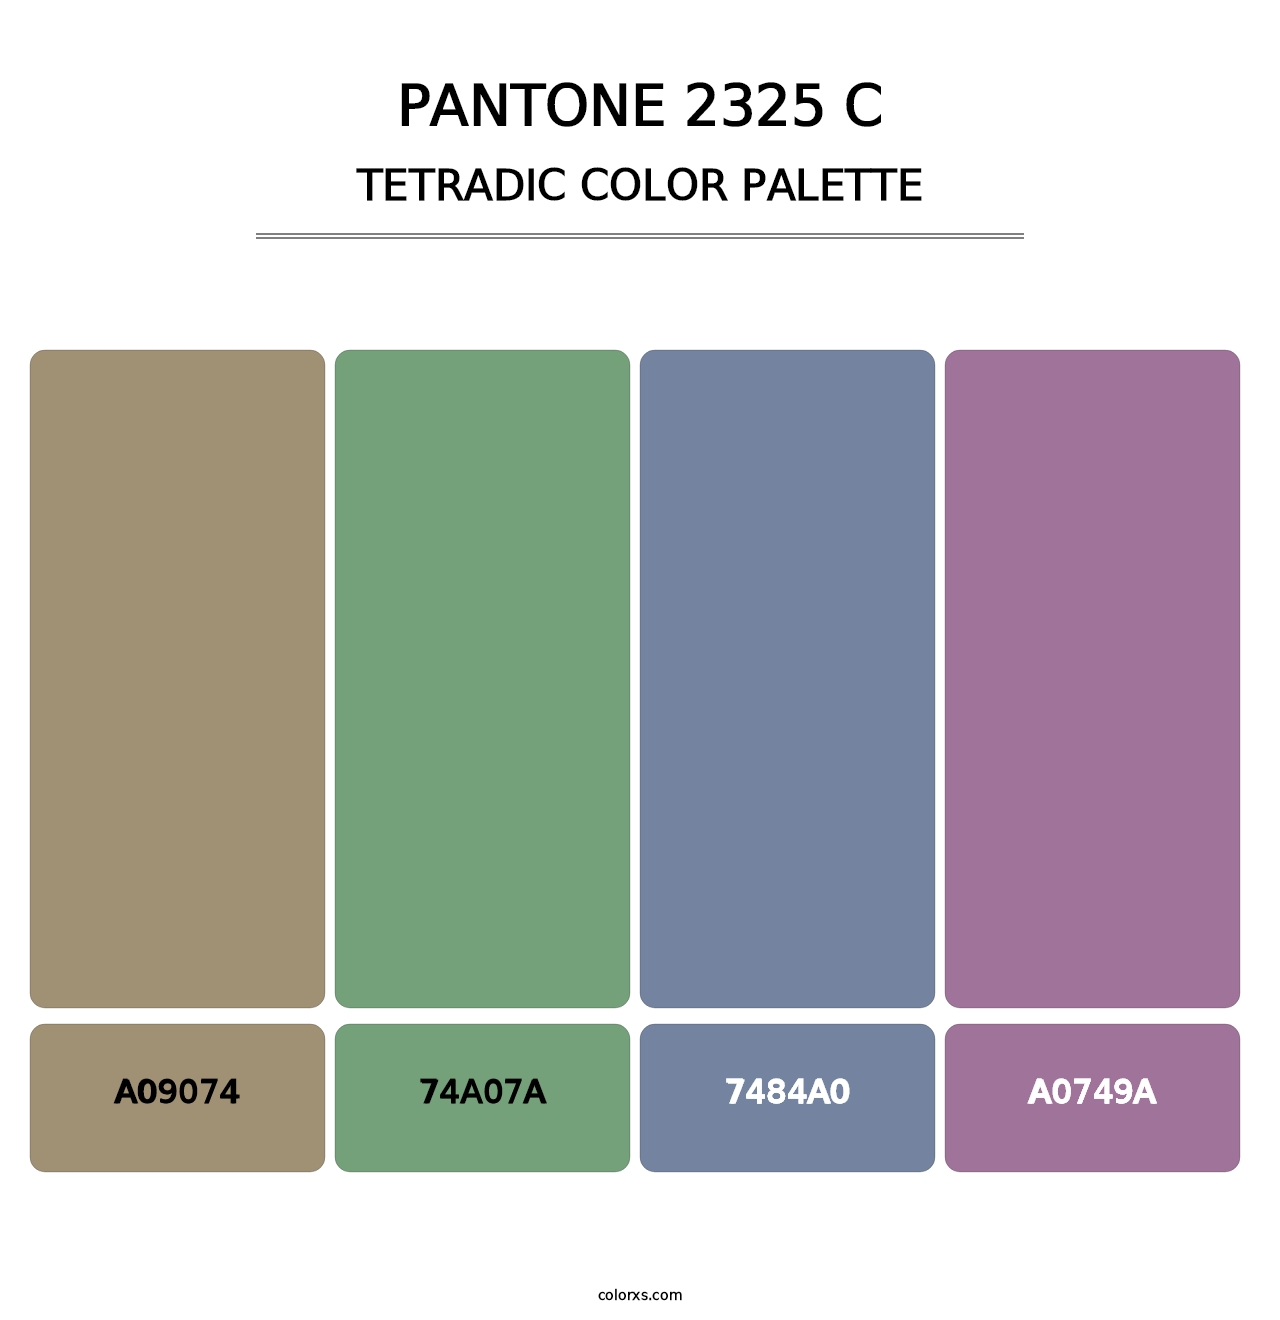 PANTONE 2325 C - Tetradic Color Palette